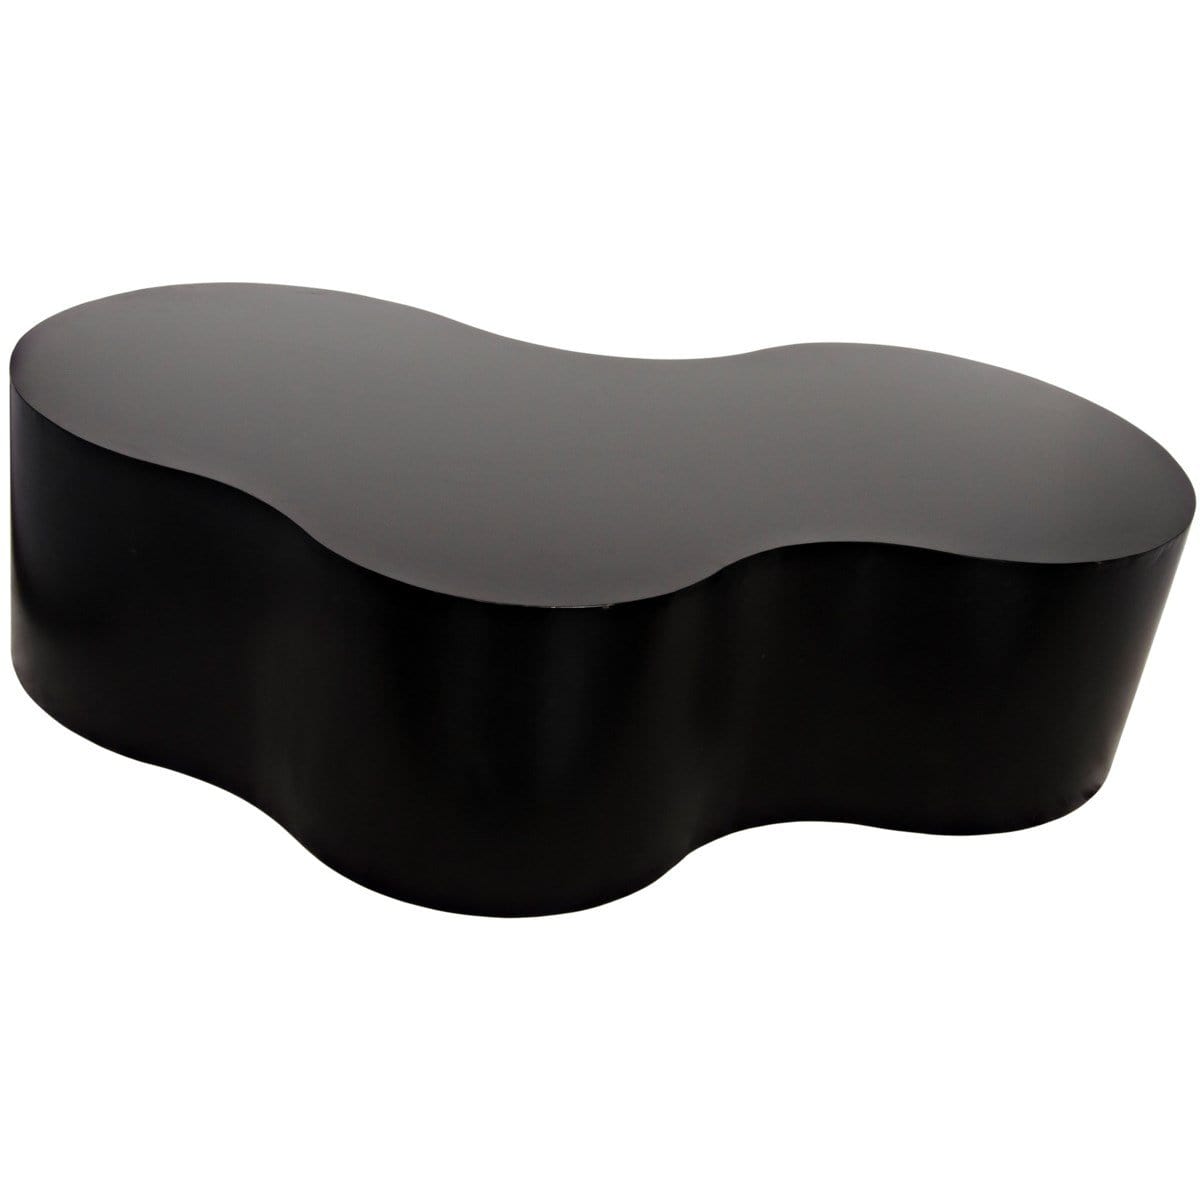 Noir Island Coffee Table Furniture Noir-GTAB1006MT 00842449106598